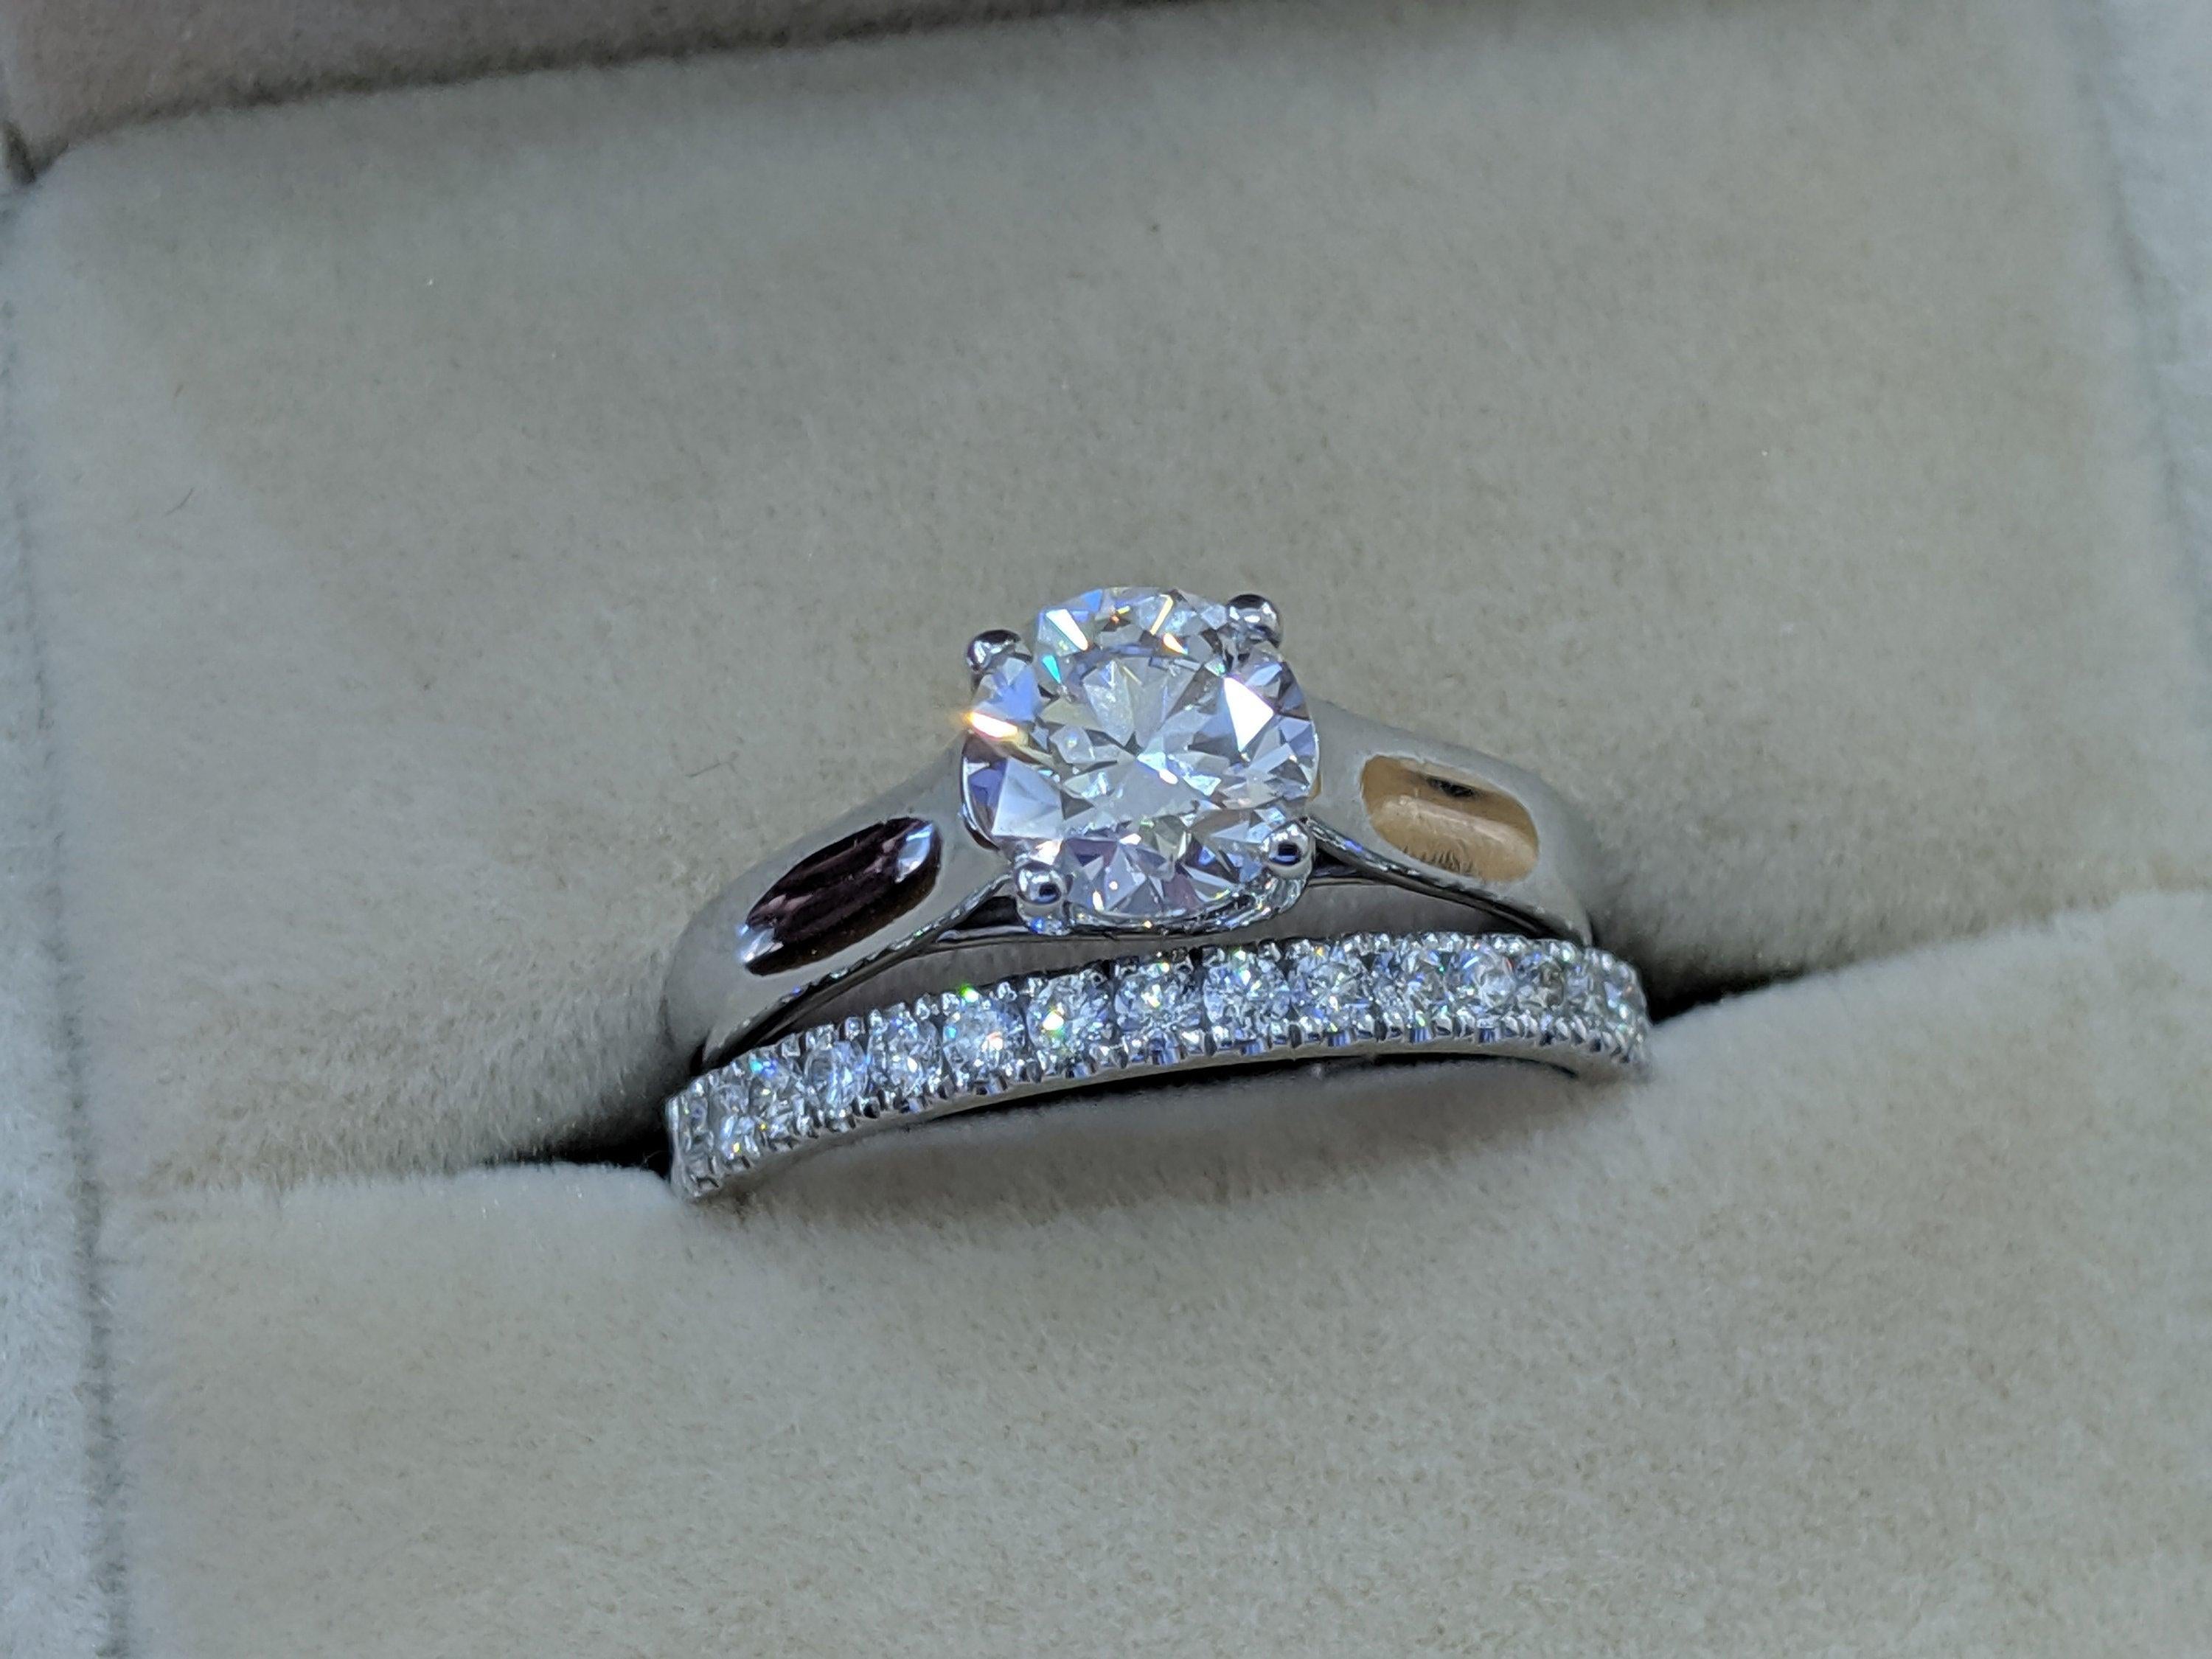 1 Carat Diamond Rings Set, 1.50ct Engagement Ring Set, Solitaire Engagement Ring, Classic Diamond Ring, Bridal Set, Anniversary Gift
 
 Main Stone Name: Natural Earth Mined Diamond
 Main Stone Weight: 1.03 ct.
 Main Stone Clarity: VS2
 Main Stone